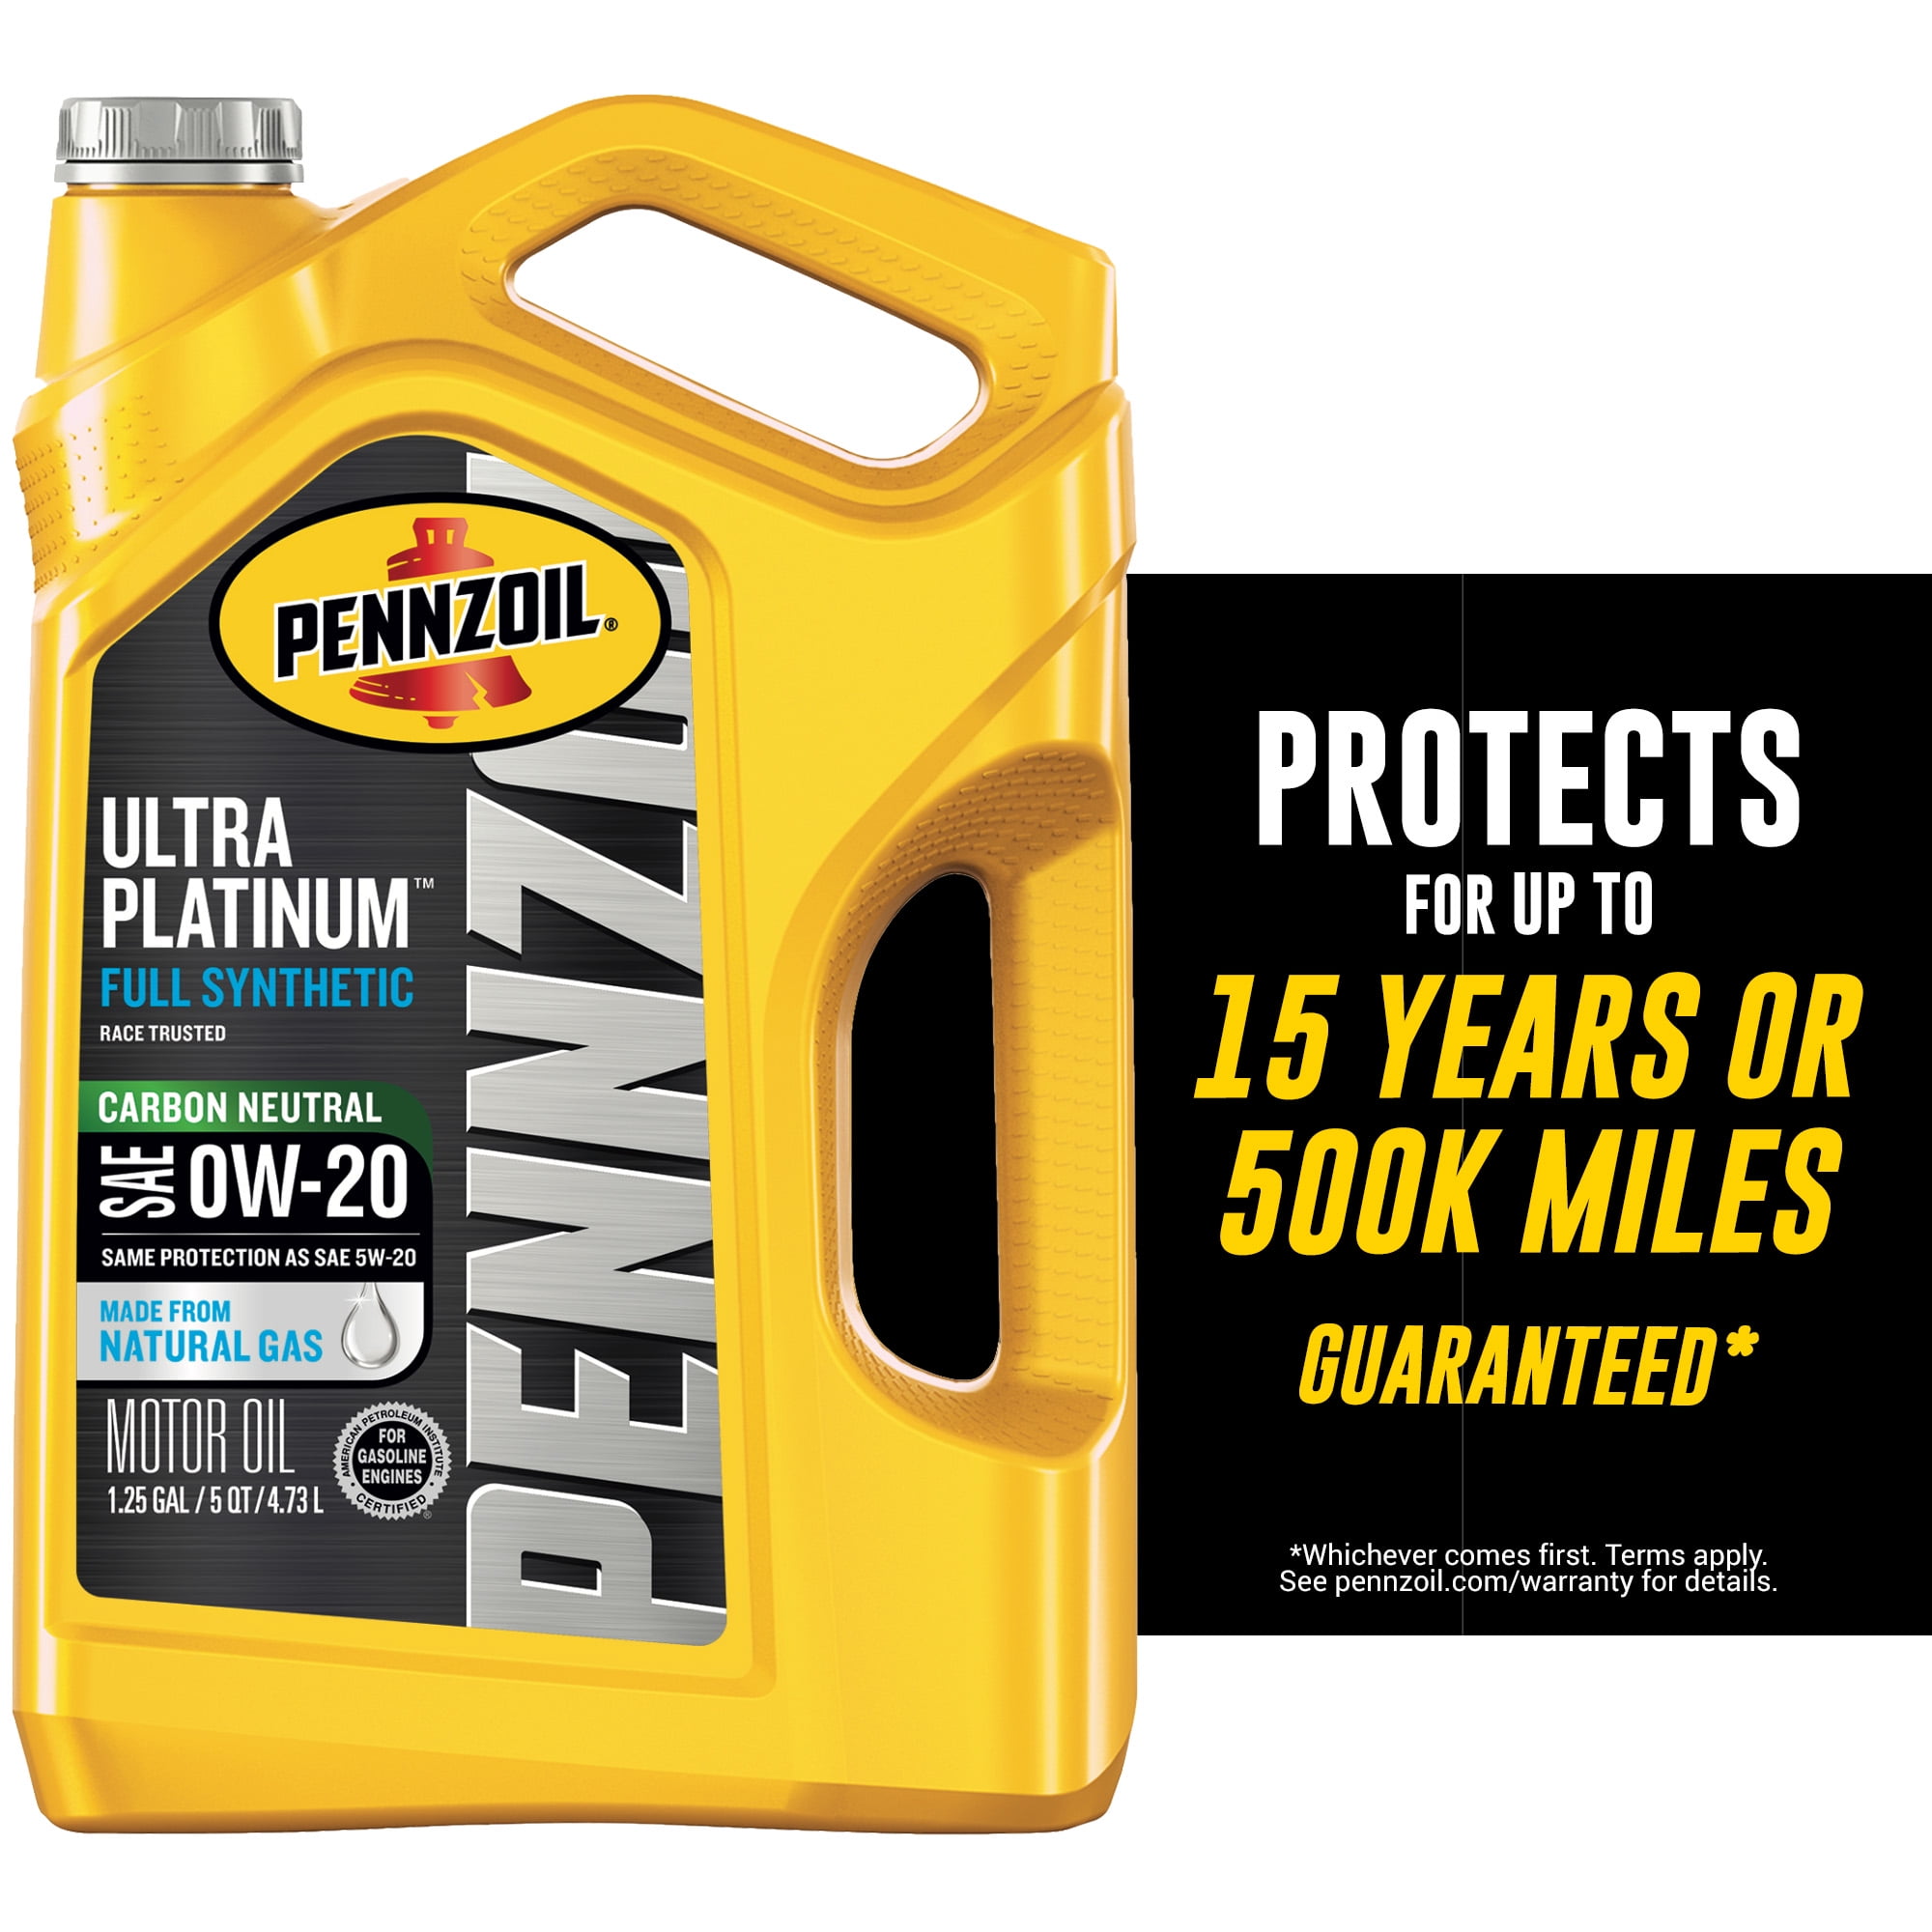 Pennzoil Platinum Full Synthetic Motor Oil Rebate